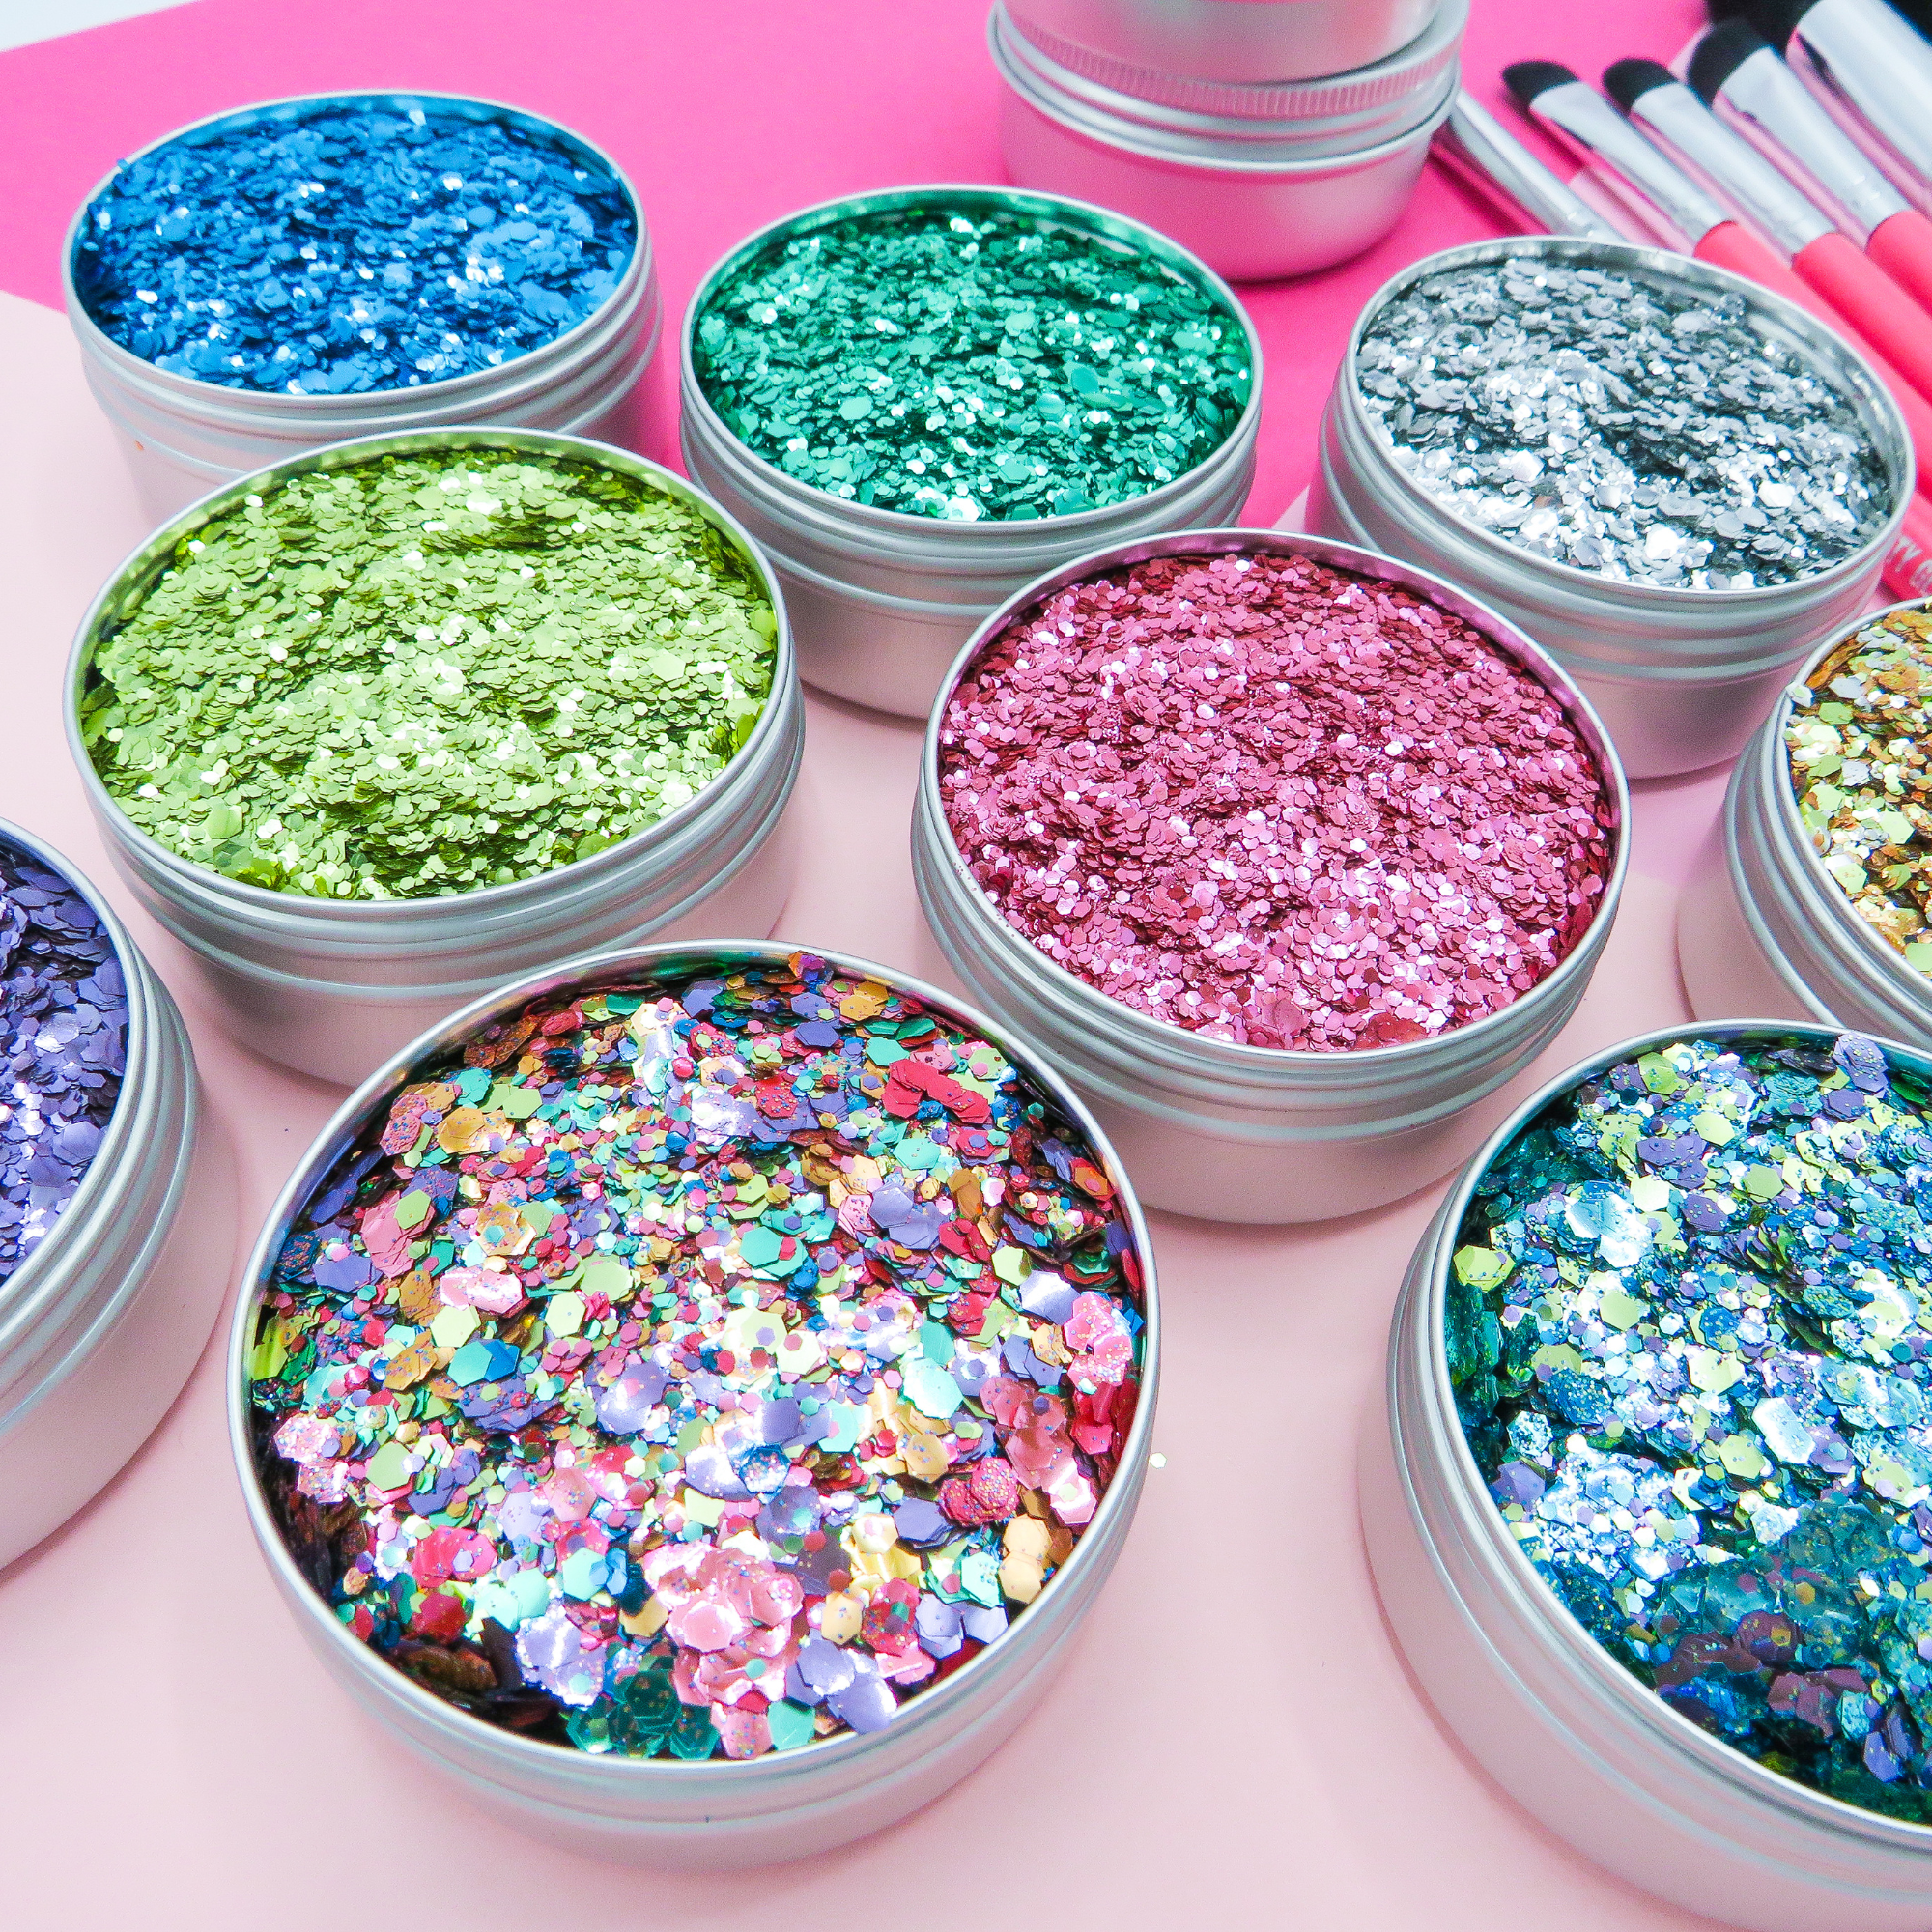 Glitter artist' starter kit by Luminosity Glitter. Including 9 eco glitters, hot pink makeup brushes and aloe vera application gel.